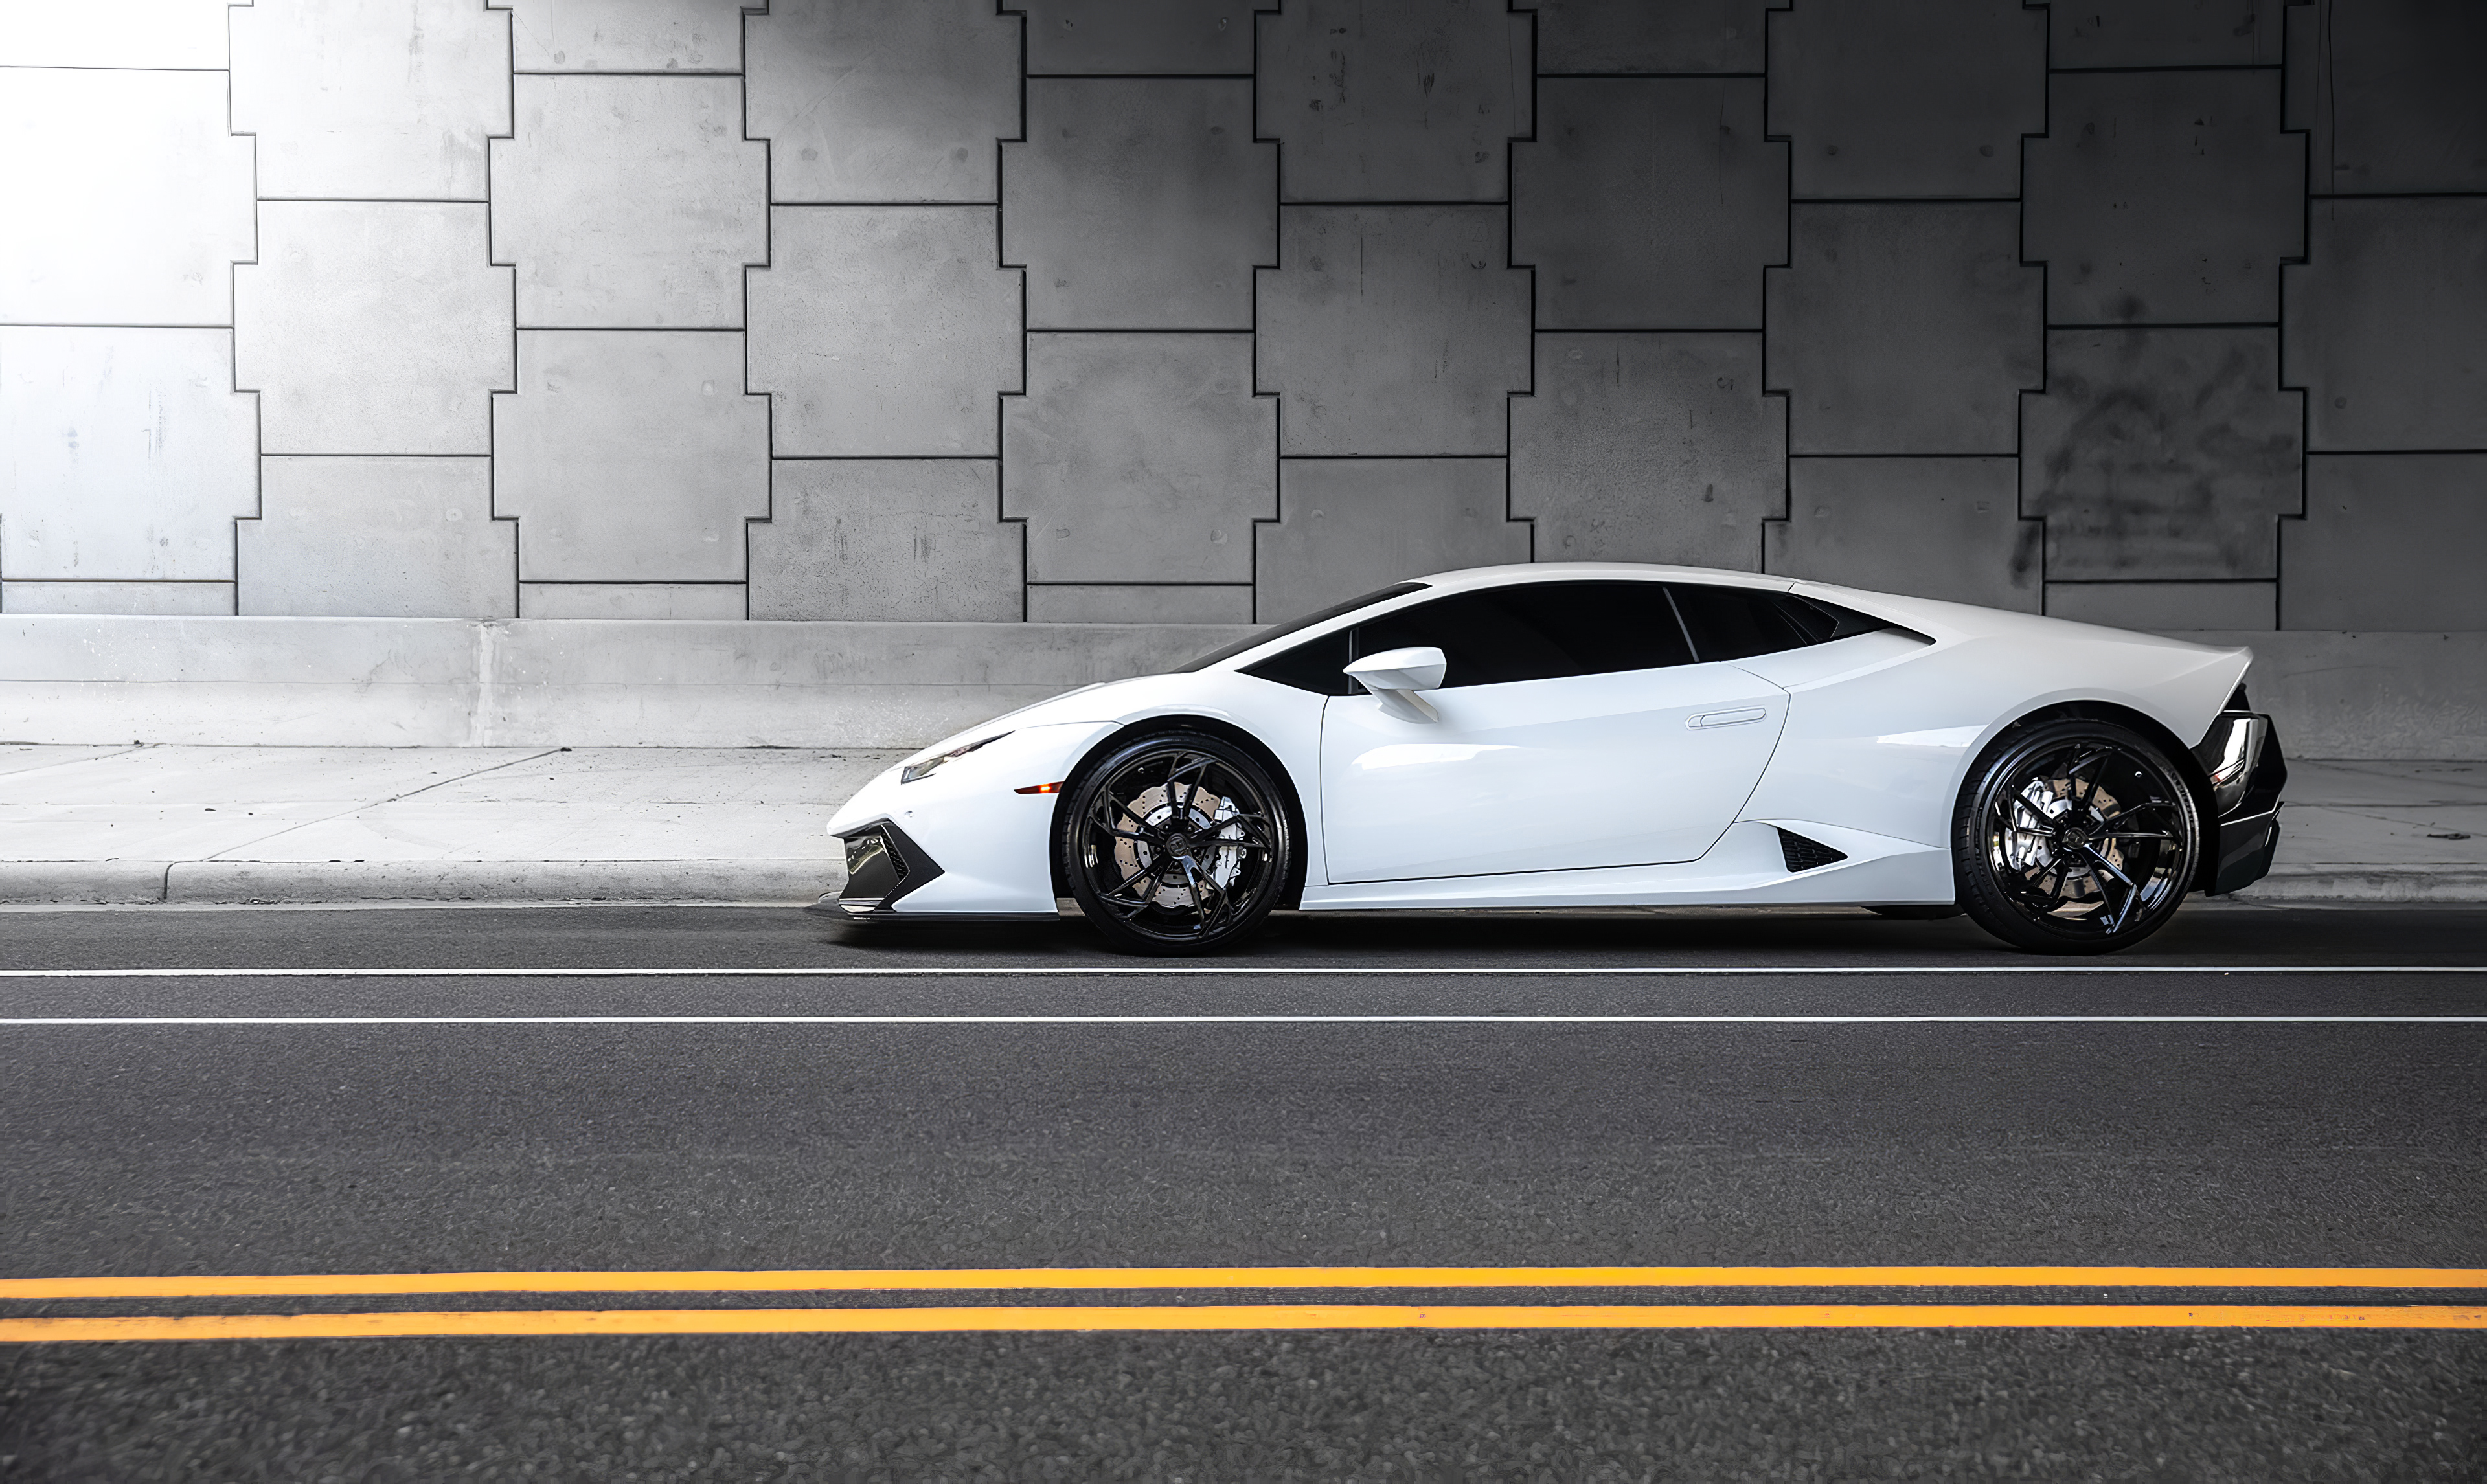 Baixe gratuitamente a imagem Lamborghini, Carro, Super Carro, Veículos, Carro Branco, Lamborghini Huracán na área de trabalho do seu PC